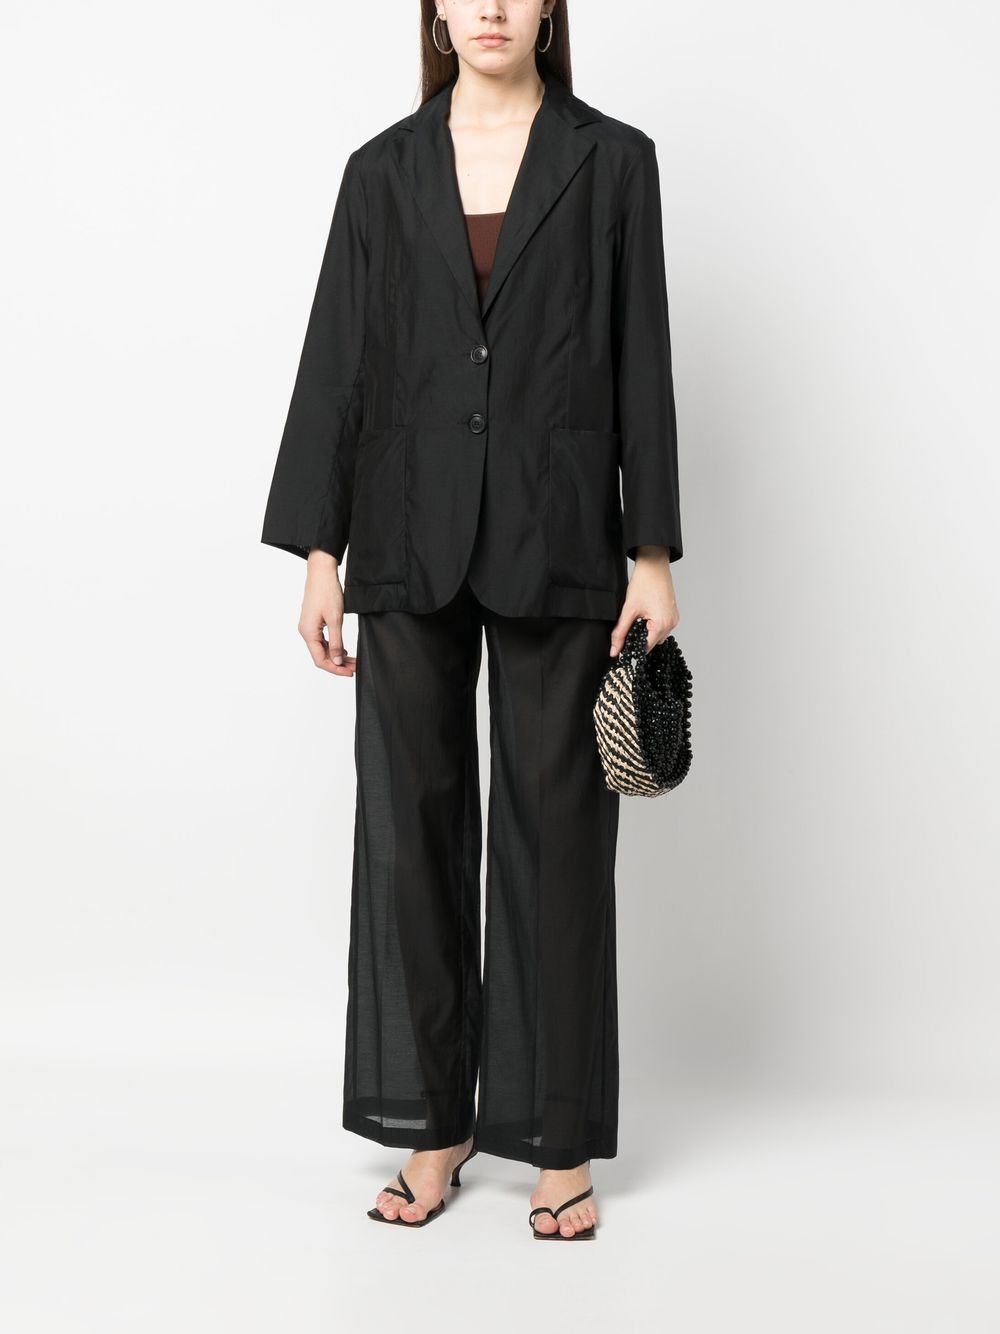 Erika Cavallini Semi Couture Jackets Black